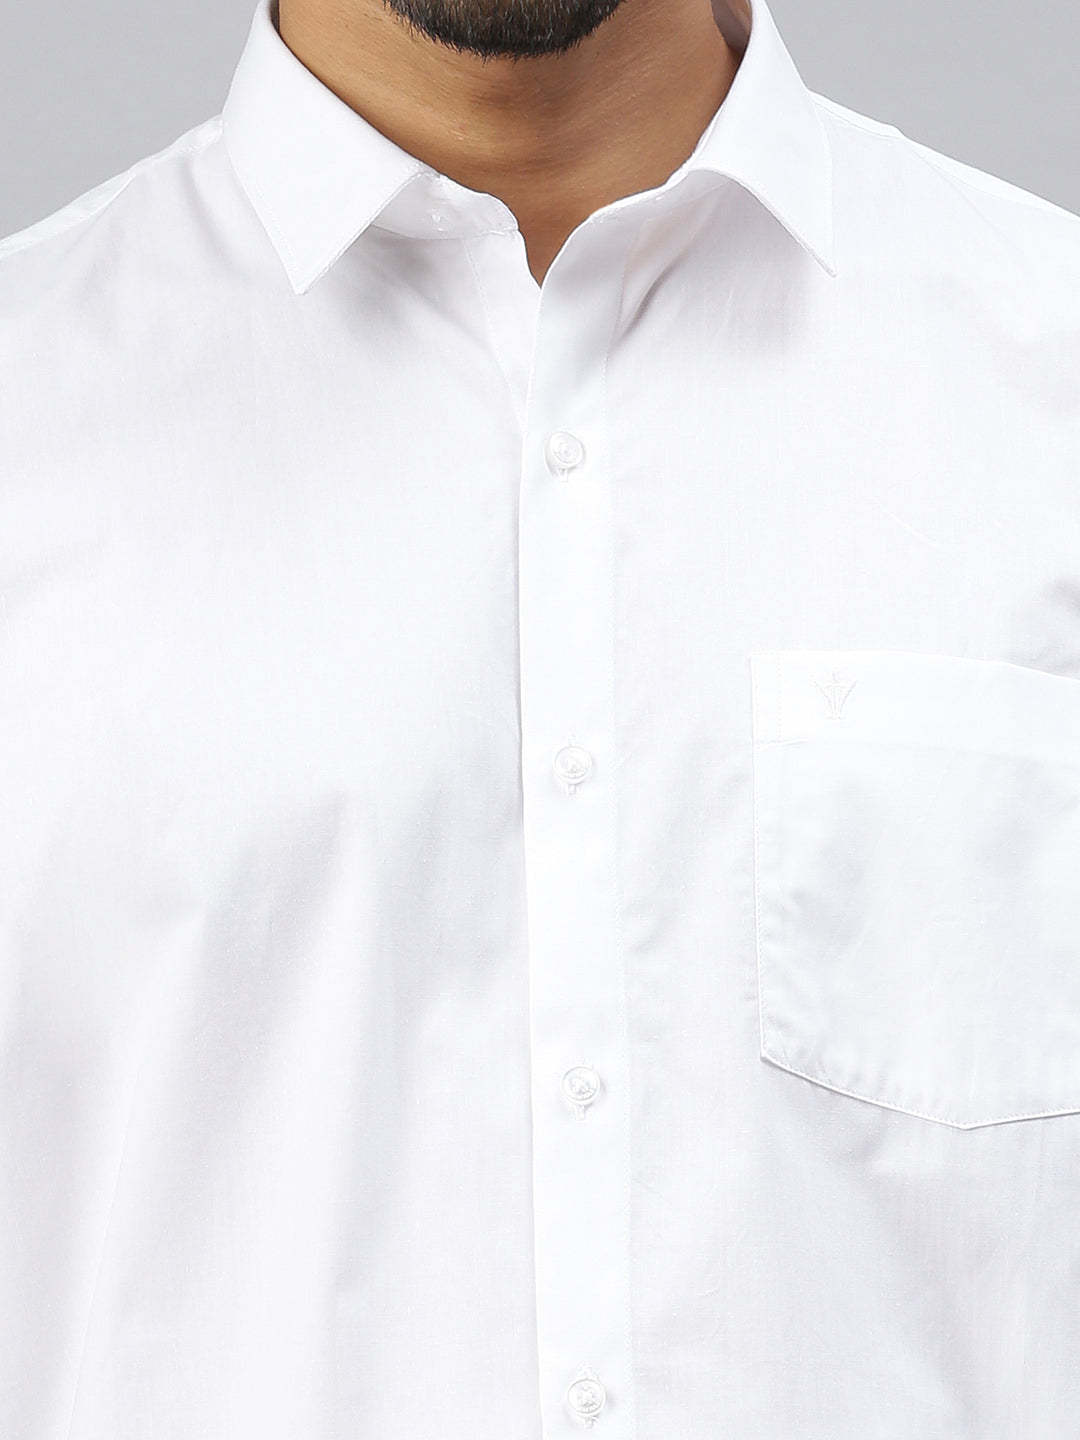 Mens 100% Cotton White Shirt Half Sleeves Breeze Cotton -Zoom view